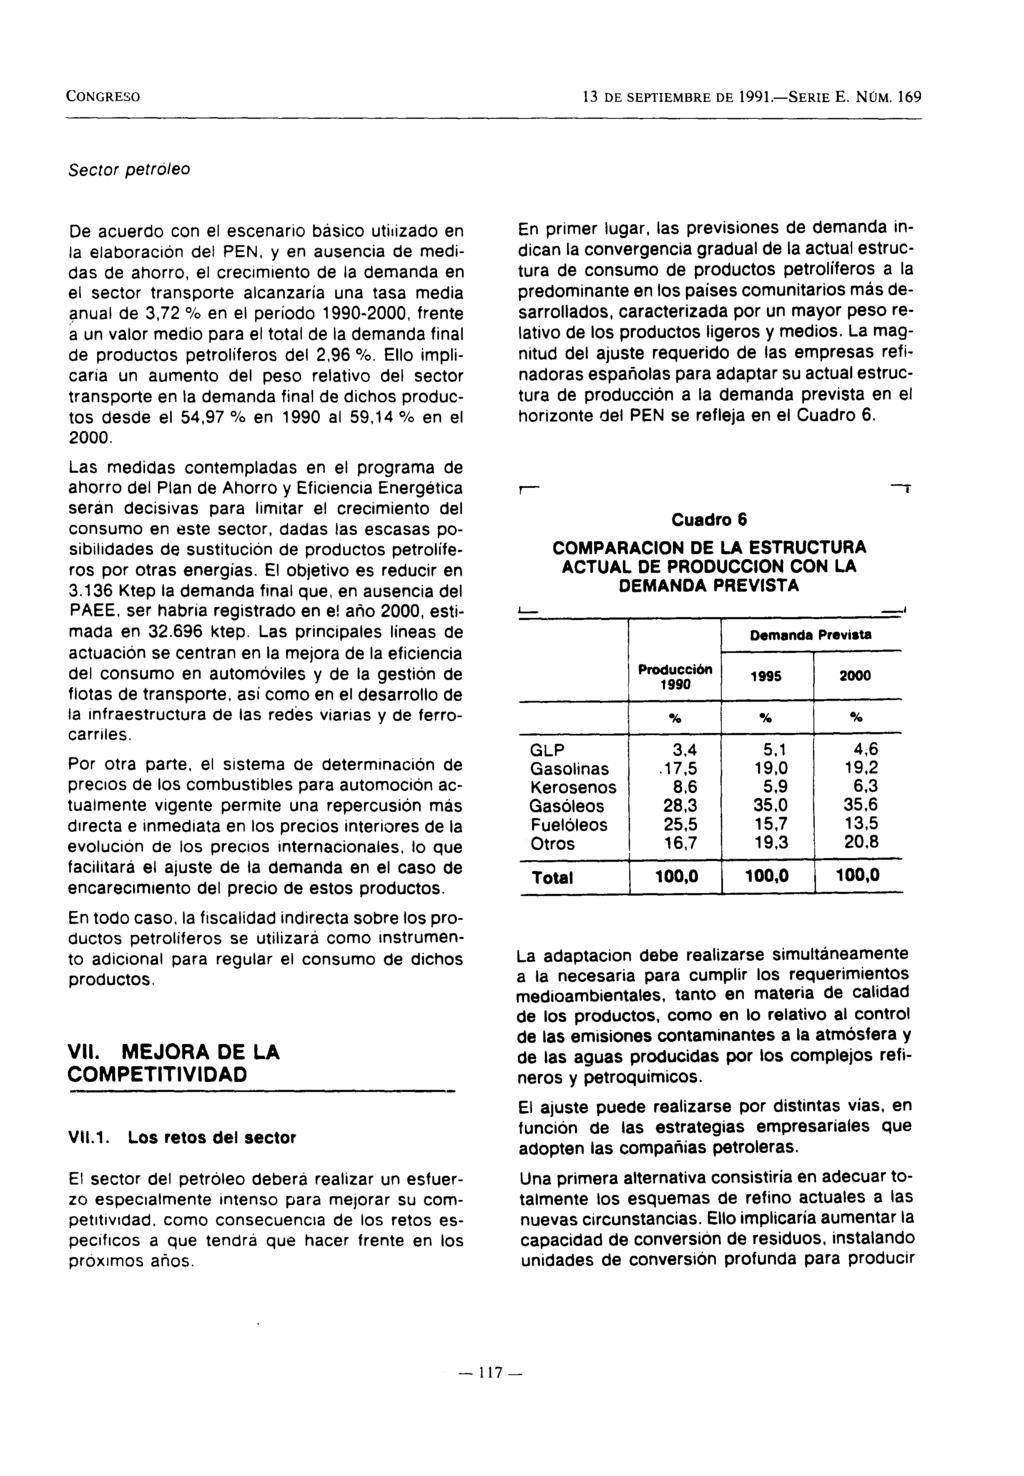 CONGRESO 13 DE SEPTIEMBRE DE 1991.-SERIE E. NOM.